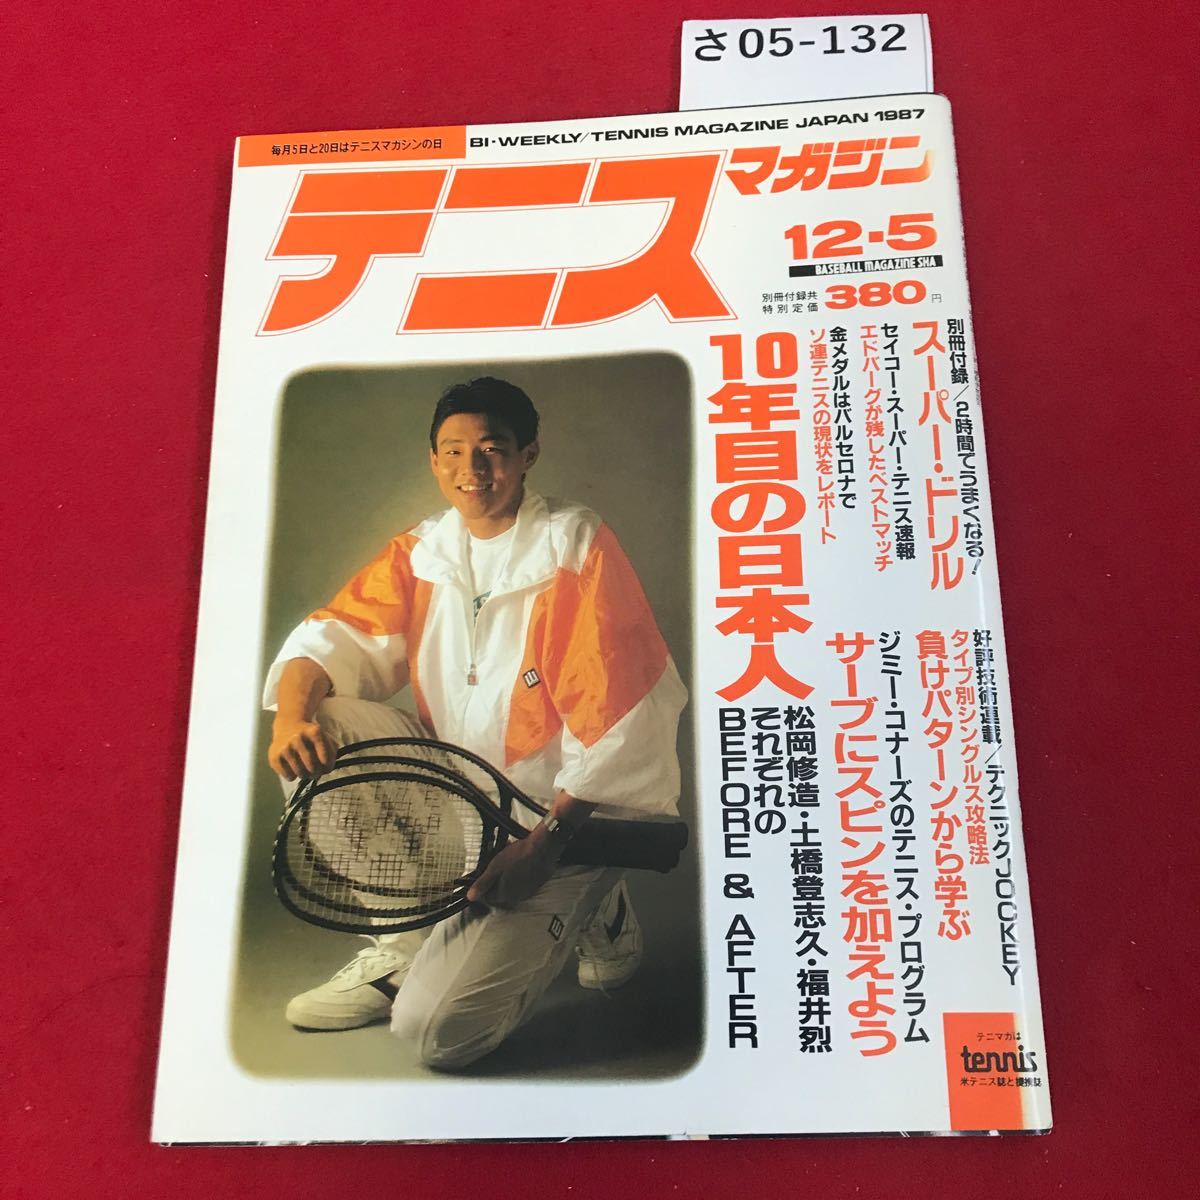 sa05-132 BI-WEEKLY/TENNIS MAGAZINE JAPAN 1987 tennis magazine 12.5 pine hill . structure 